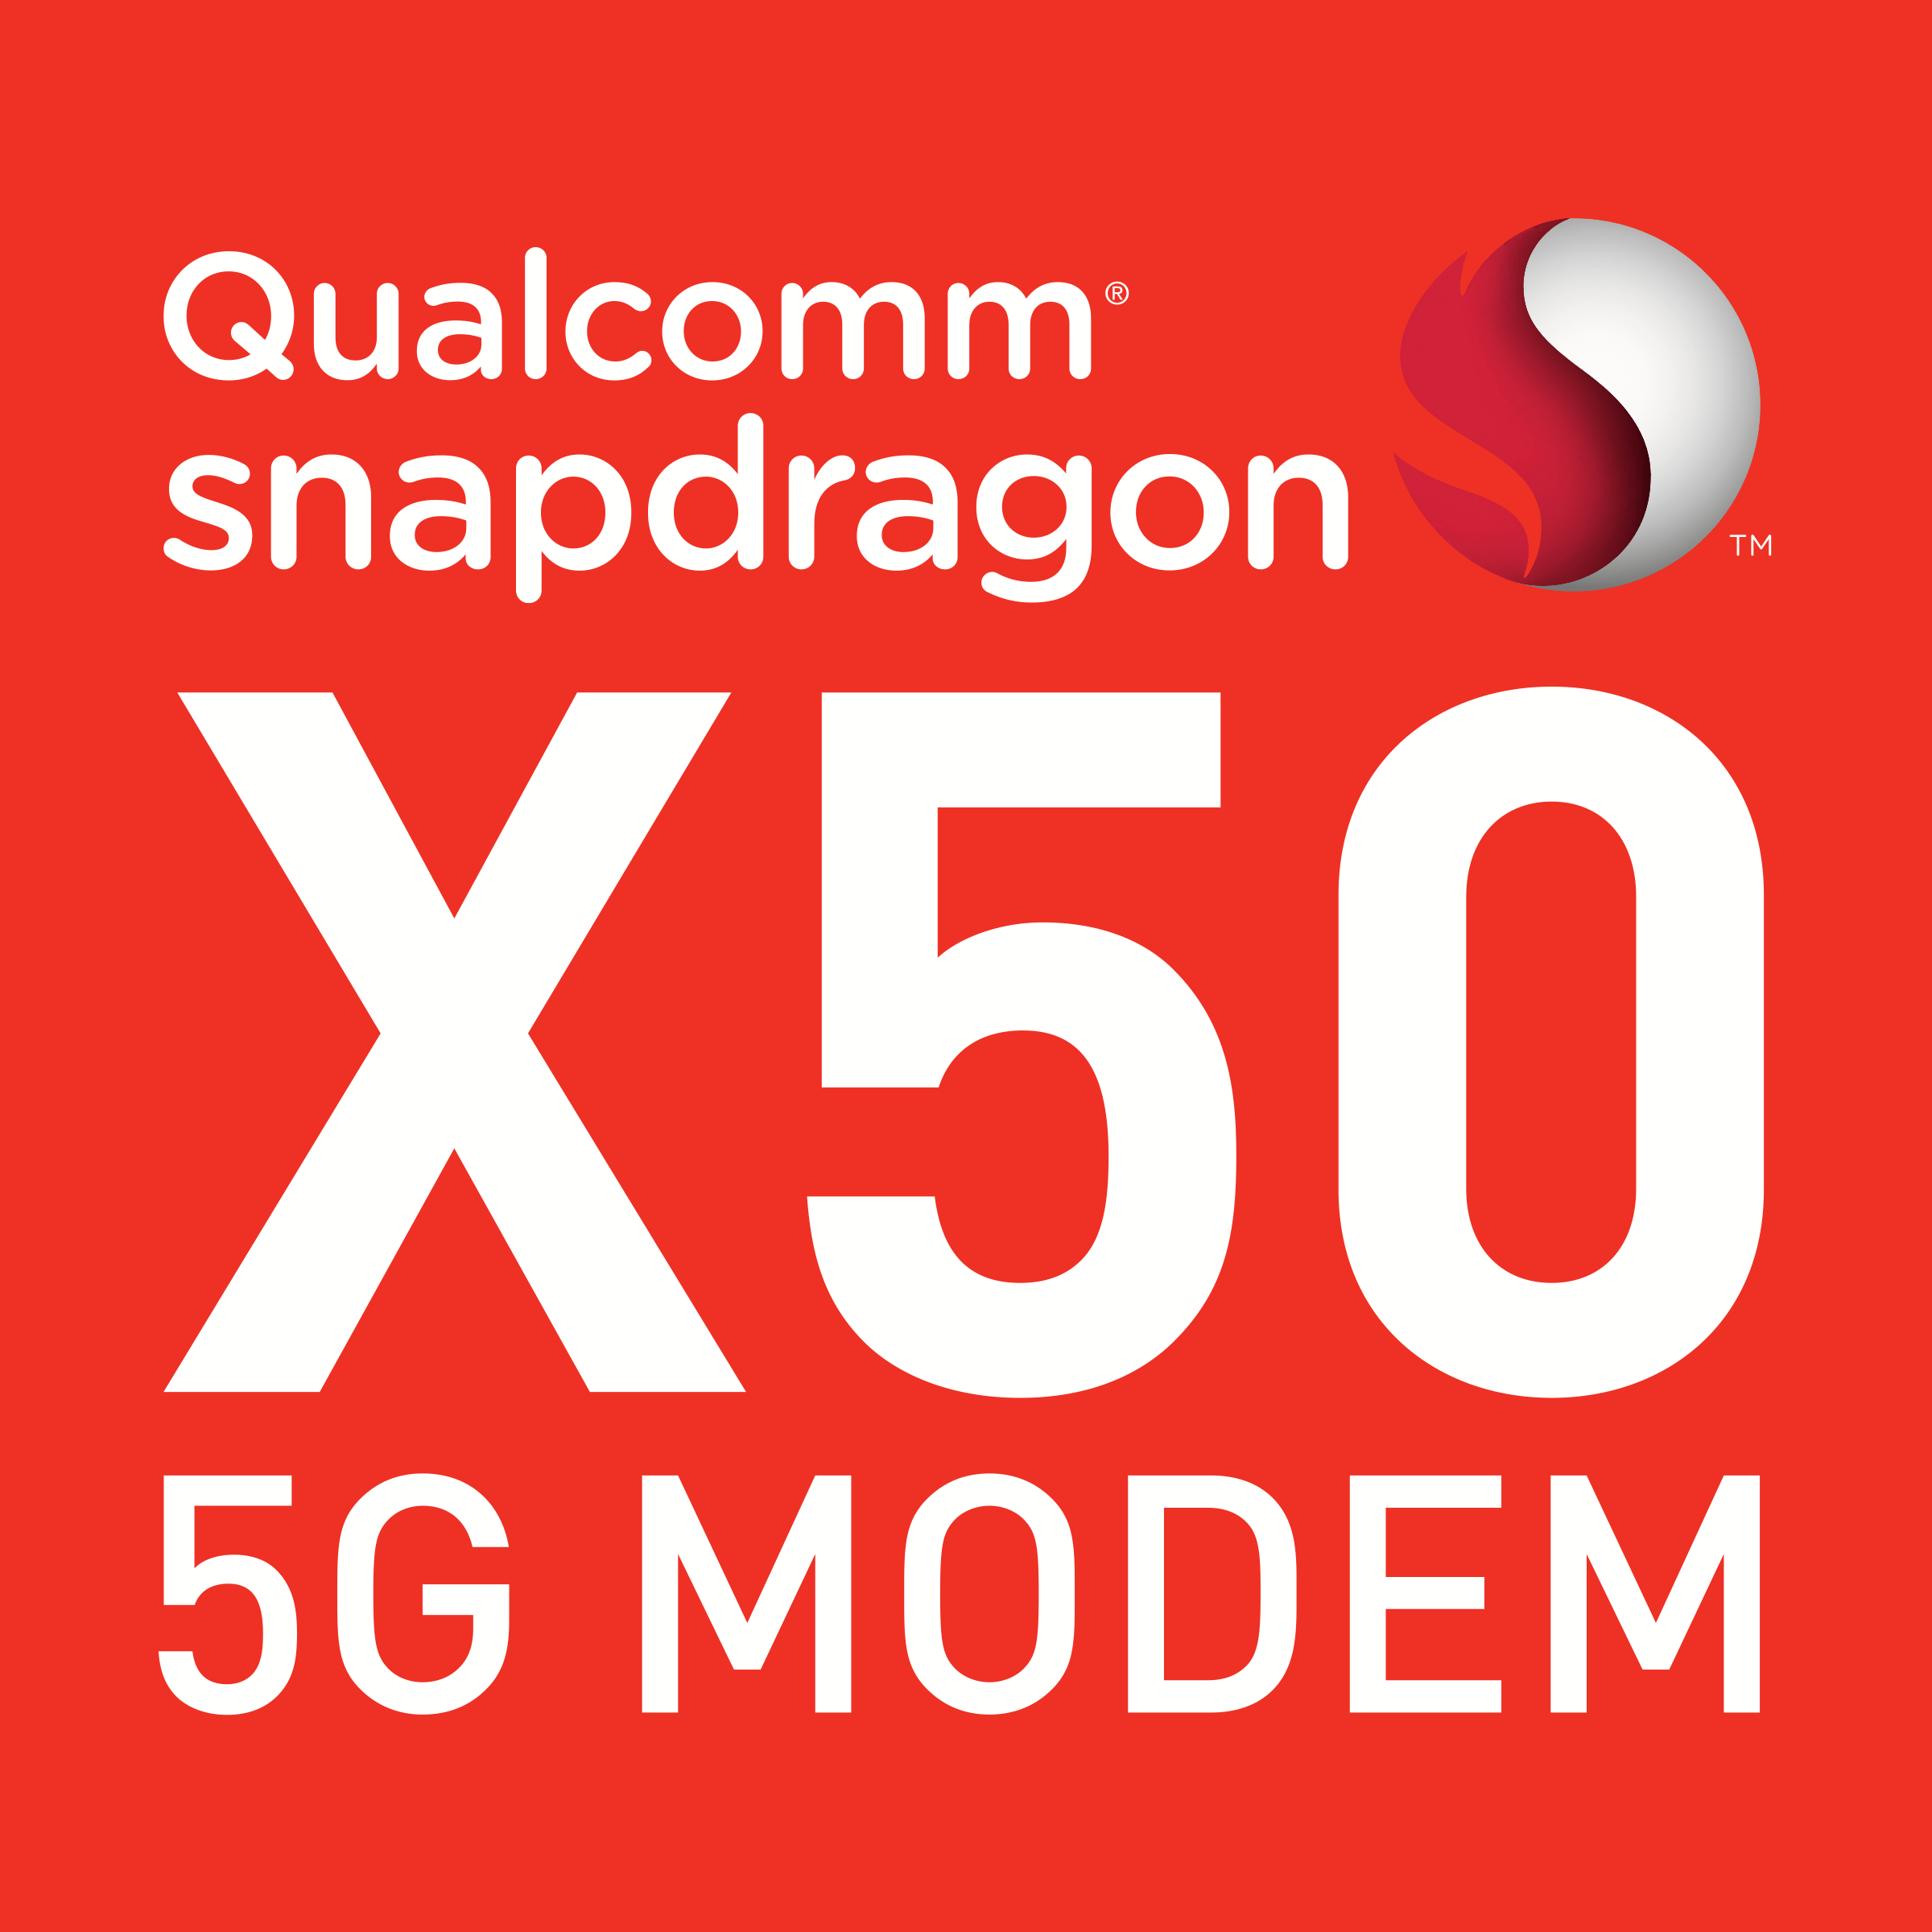 Qualcomm Snapdragon Logo - Qualcomm Snapdragon X50 5G Modem Logo